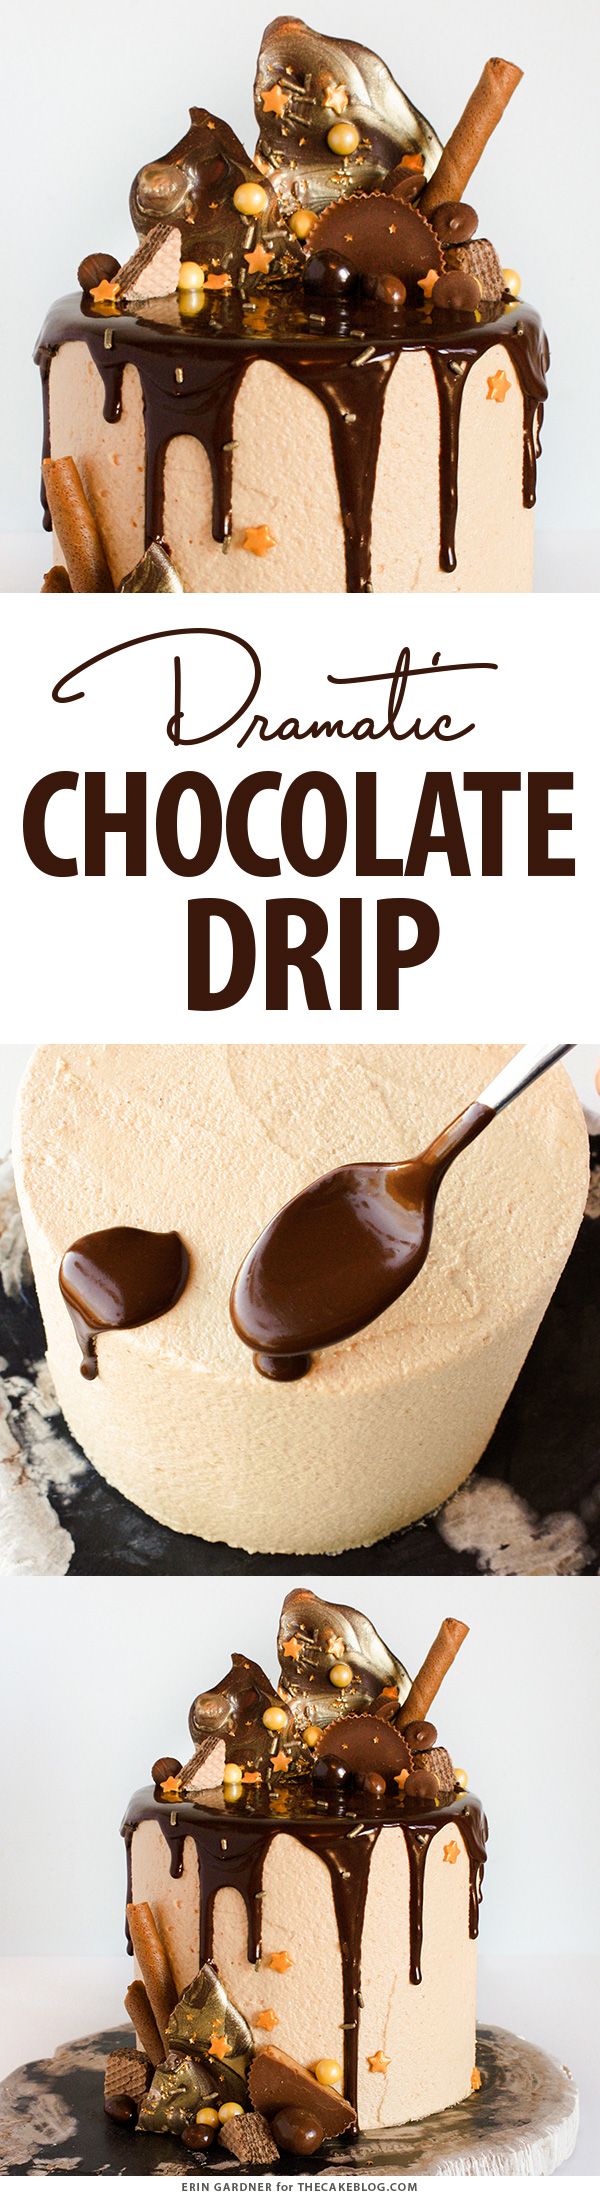 How to make a drippy ganache cake | Erin Gardner for TheCakeBlog.com